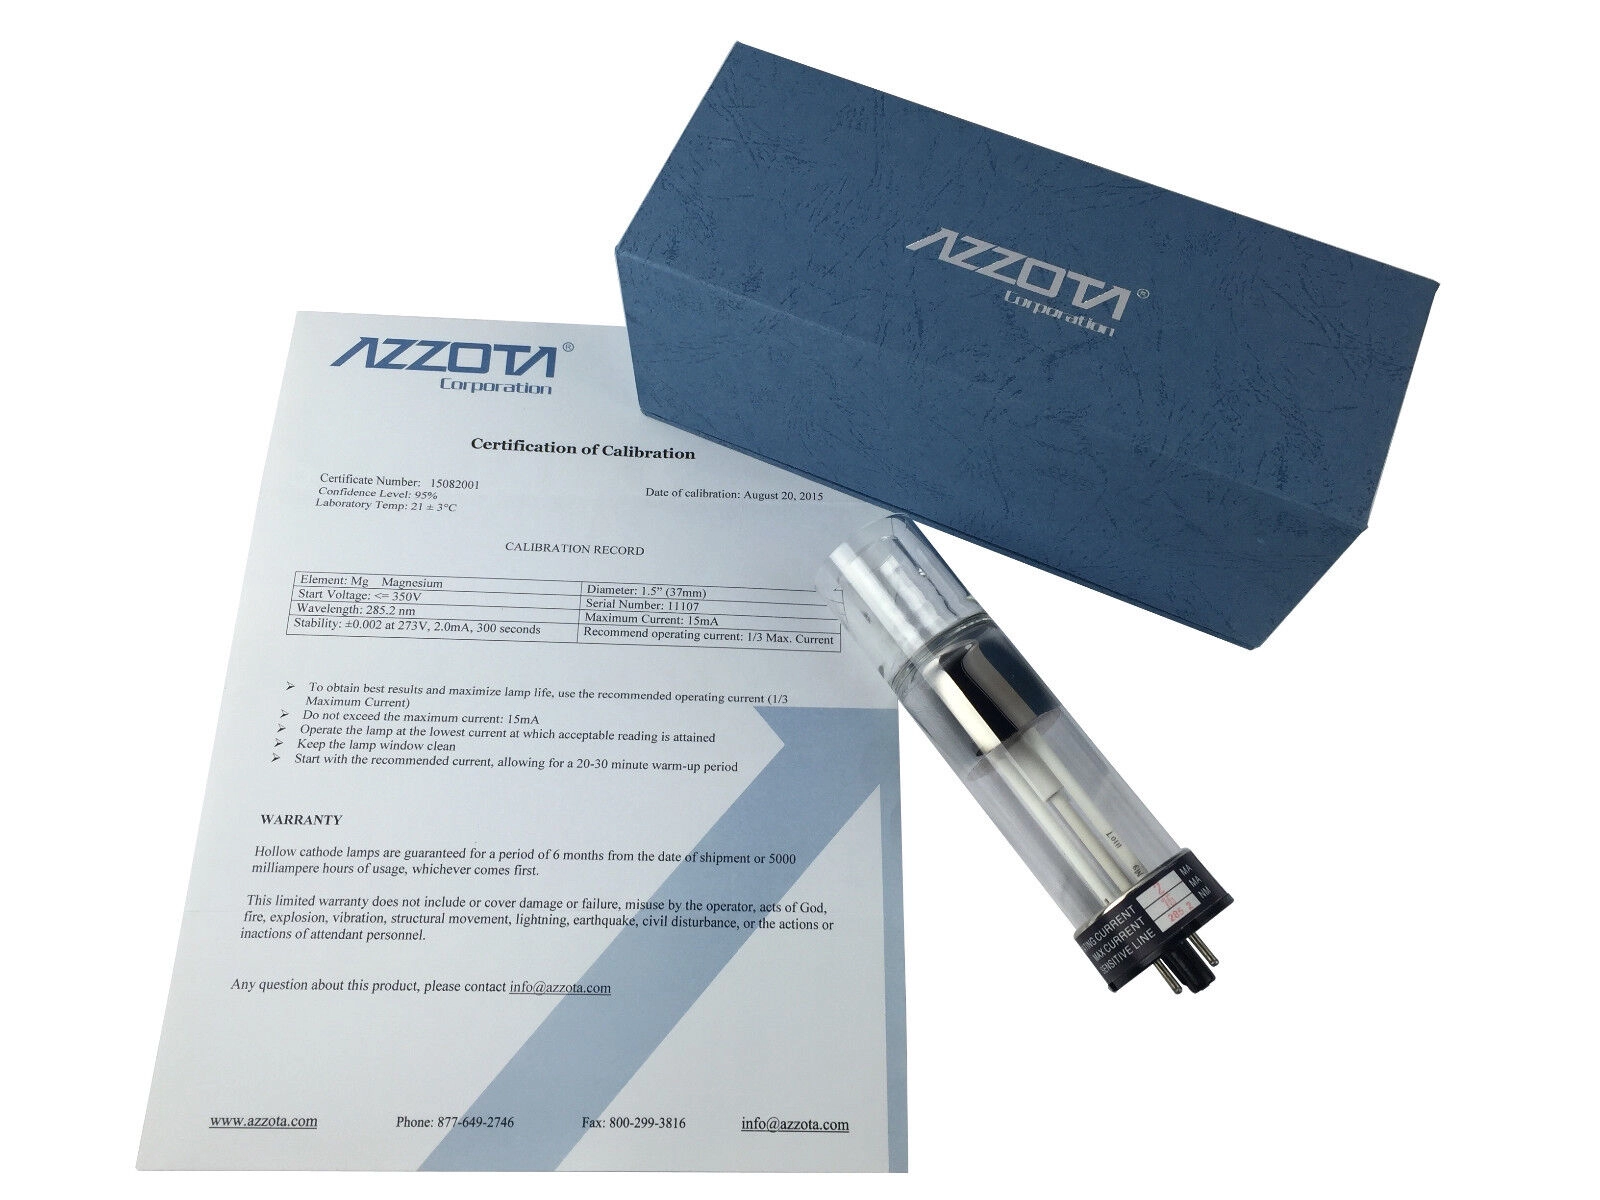 Azzota® 1.5 Hollow Cathode Lamp (HCL) Tantalum (Ta